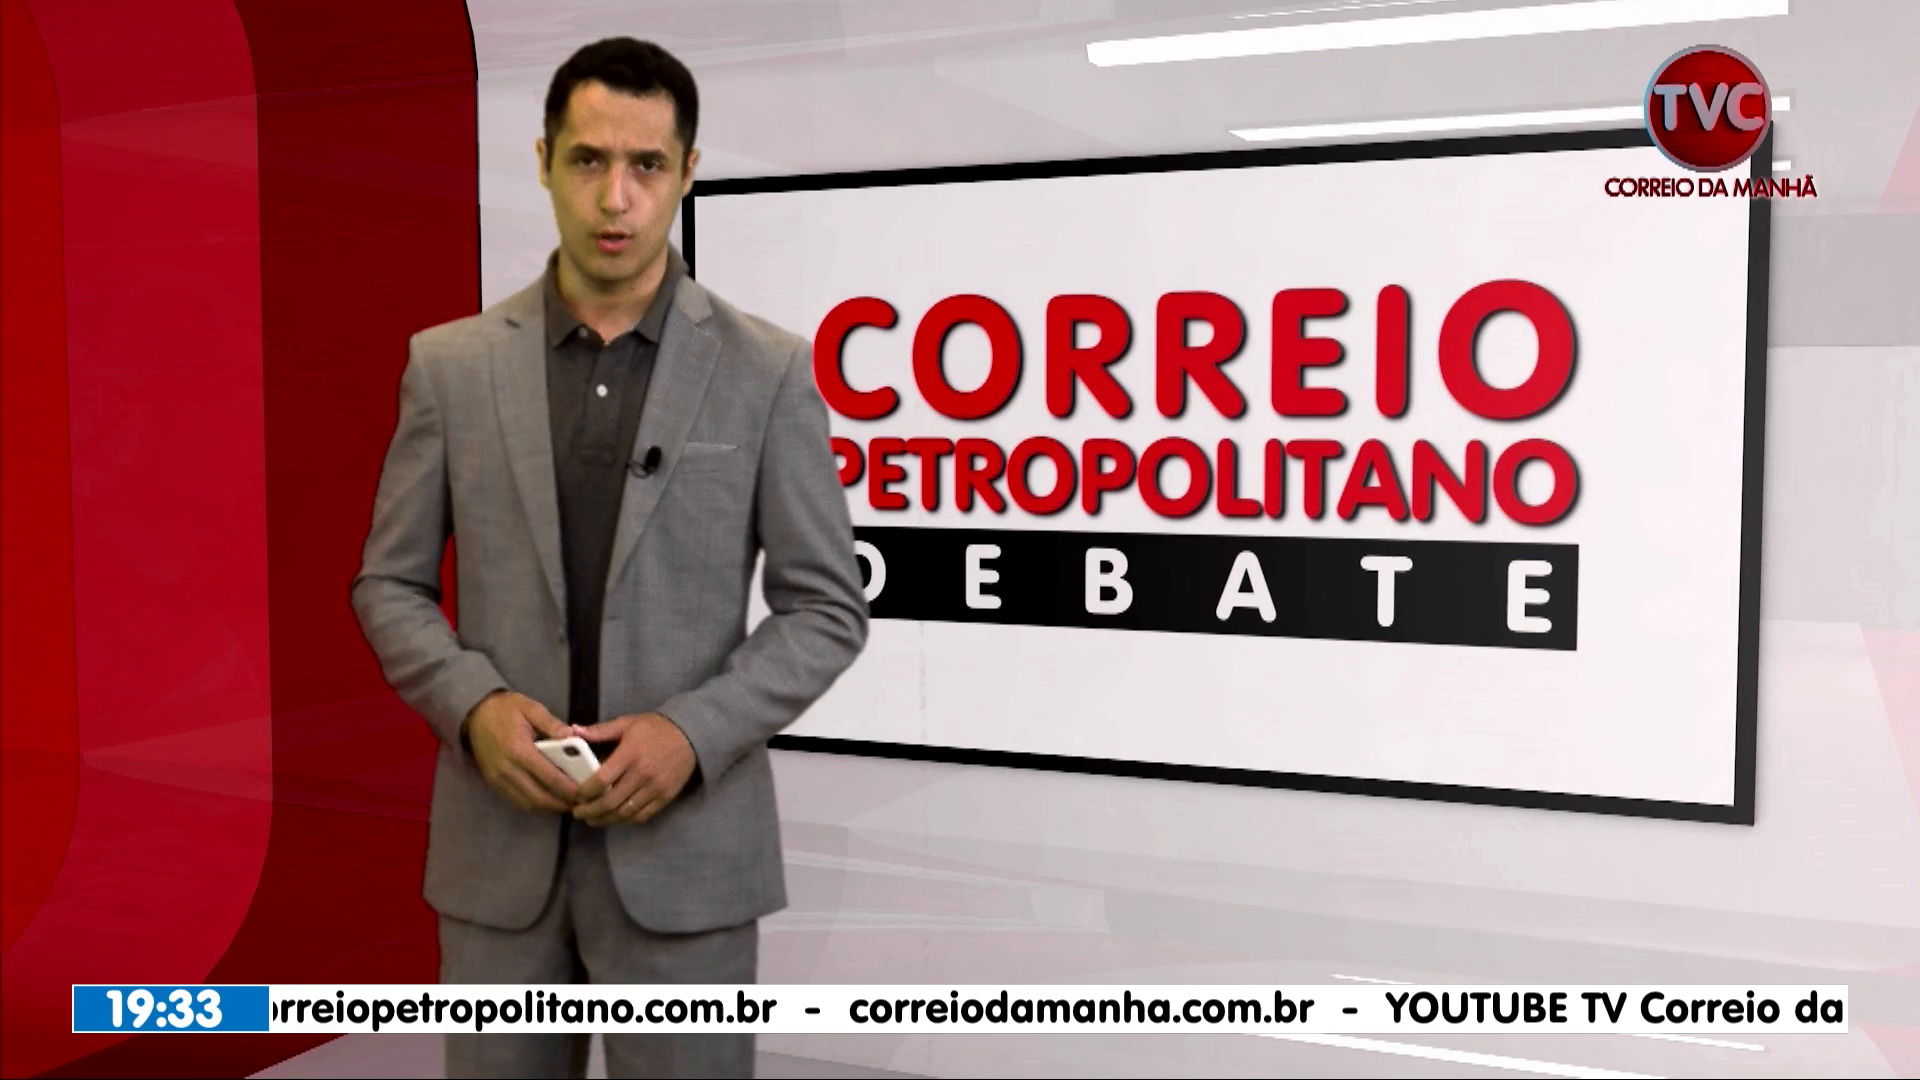 Watch TV Cidade de Petrópolis